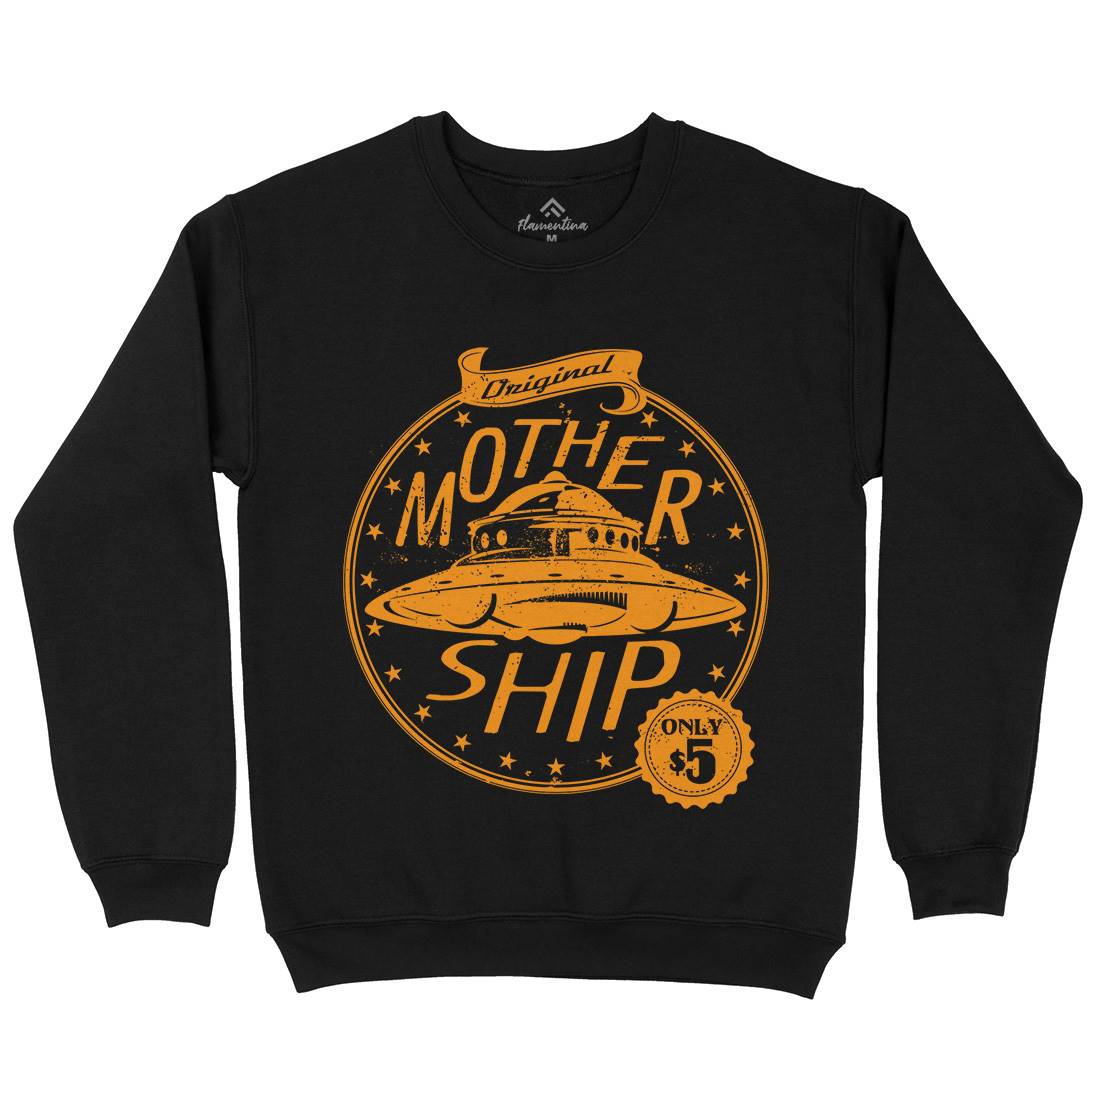 Modern Ship Kids Crew Neck Sweatshirt Space A953